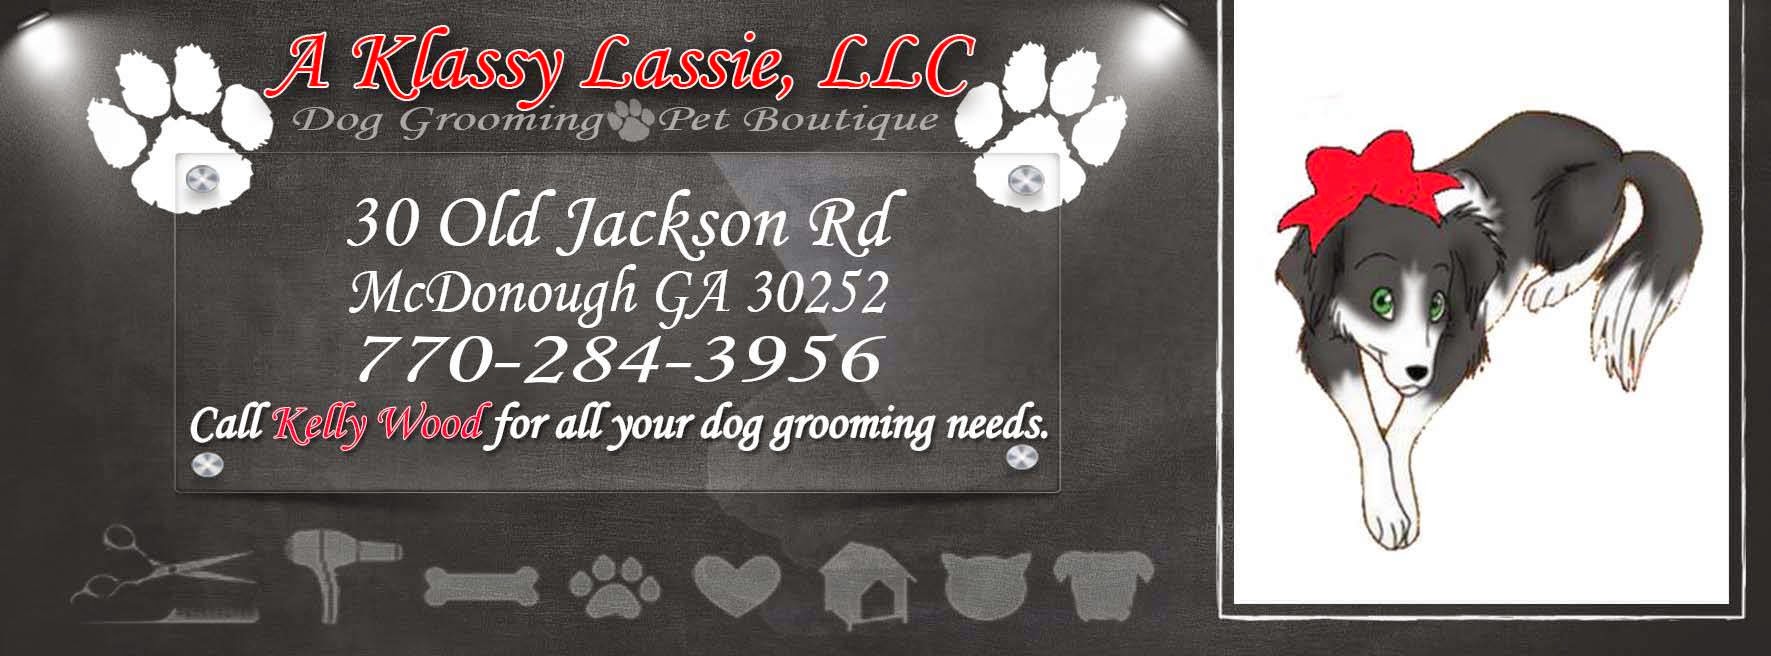 A Klassy Lassie, LLC